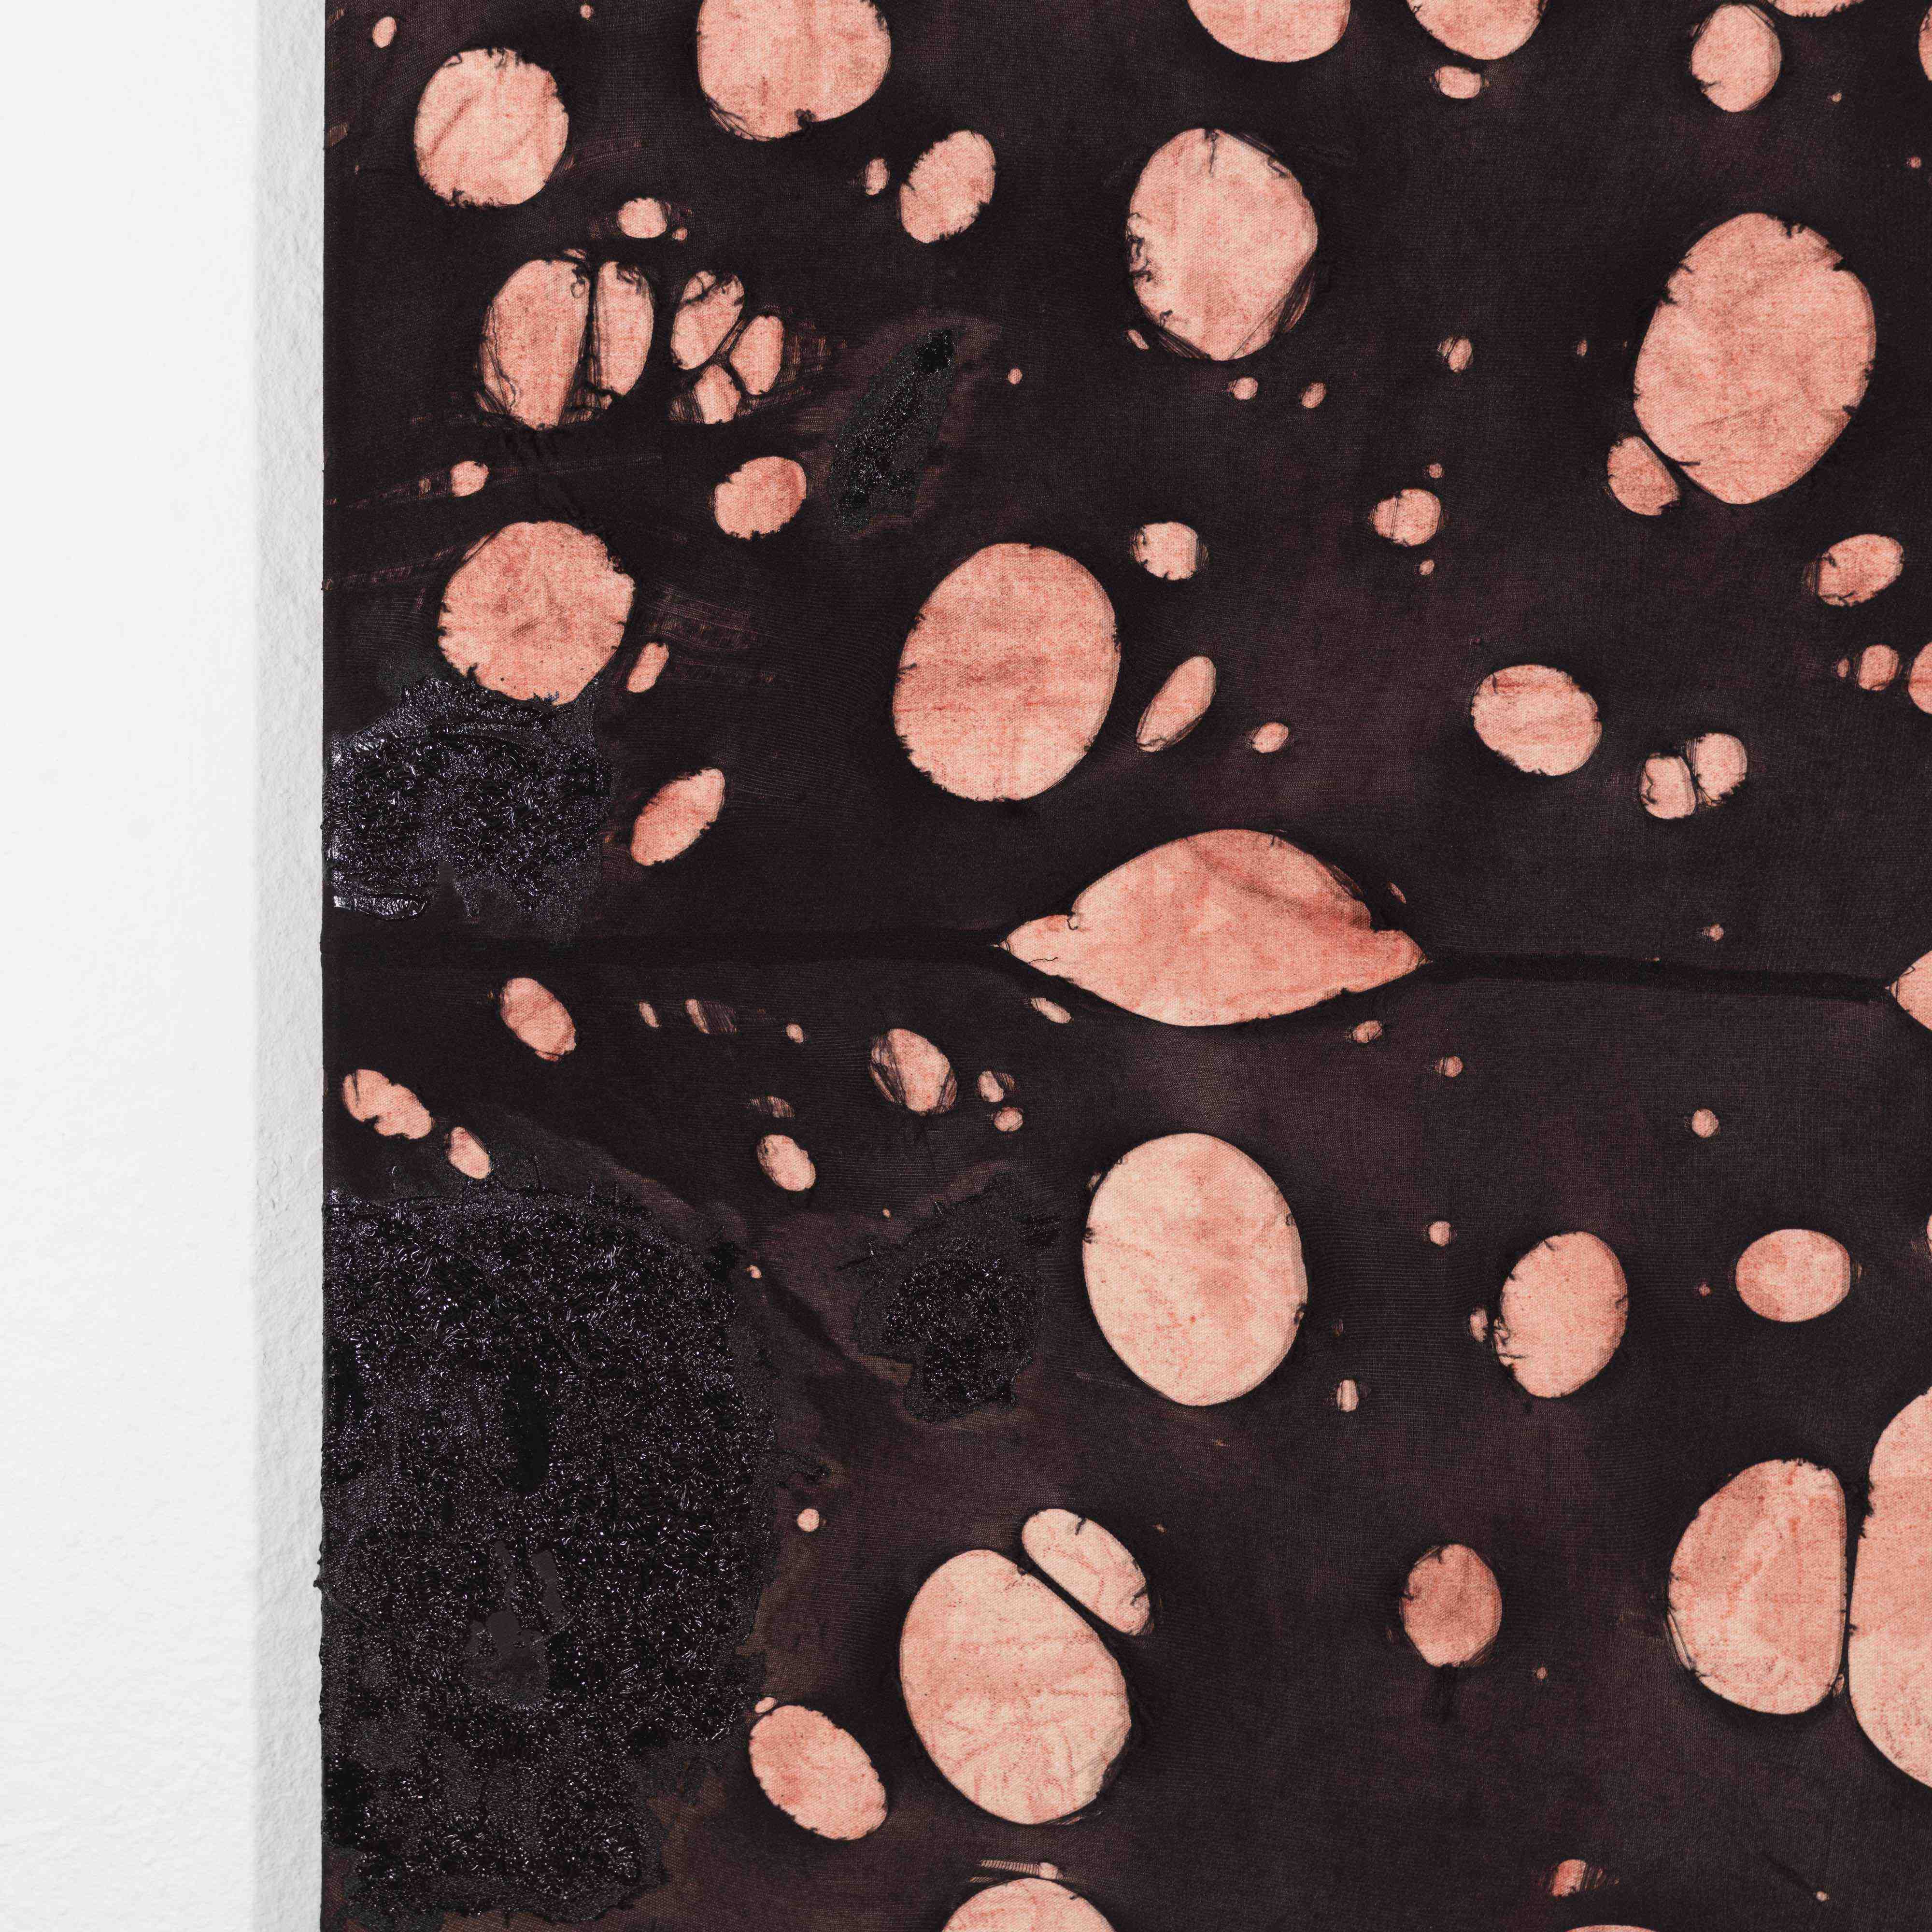 Javier Alvarez Sagredo, "Untitled (LÃ¡grimas)", 2022. Oil, sewn polyester, rabbit skin glue, pigments on cotton canvas, 60.0 x 80.0 cm